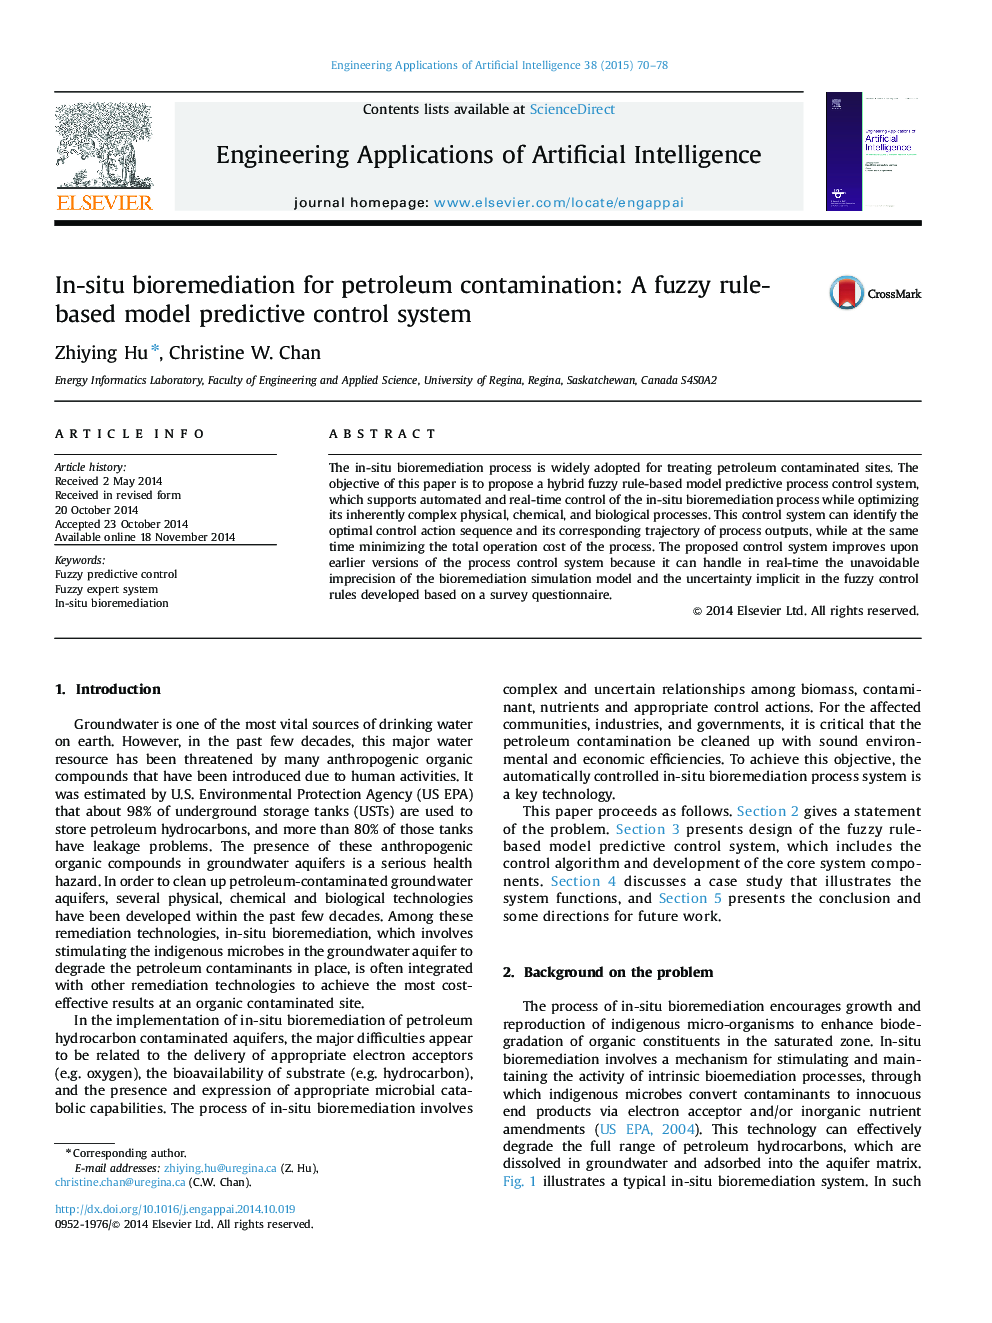 In-situ bioremediation for petroleum contamination: A fuzzy rule-based model predictive control system